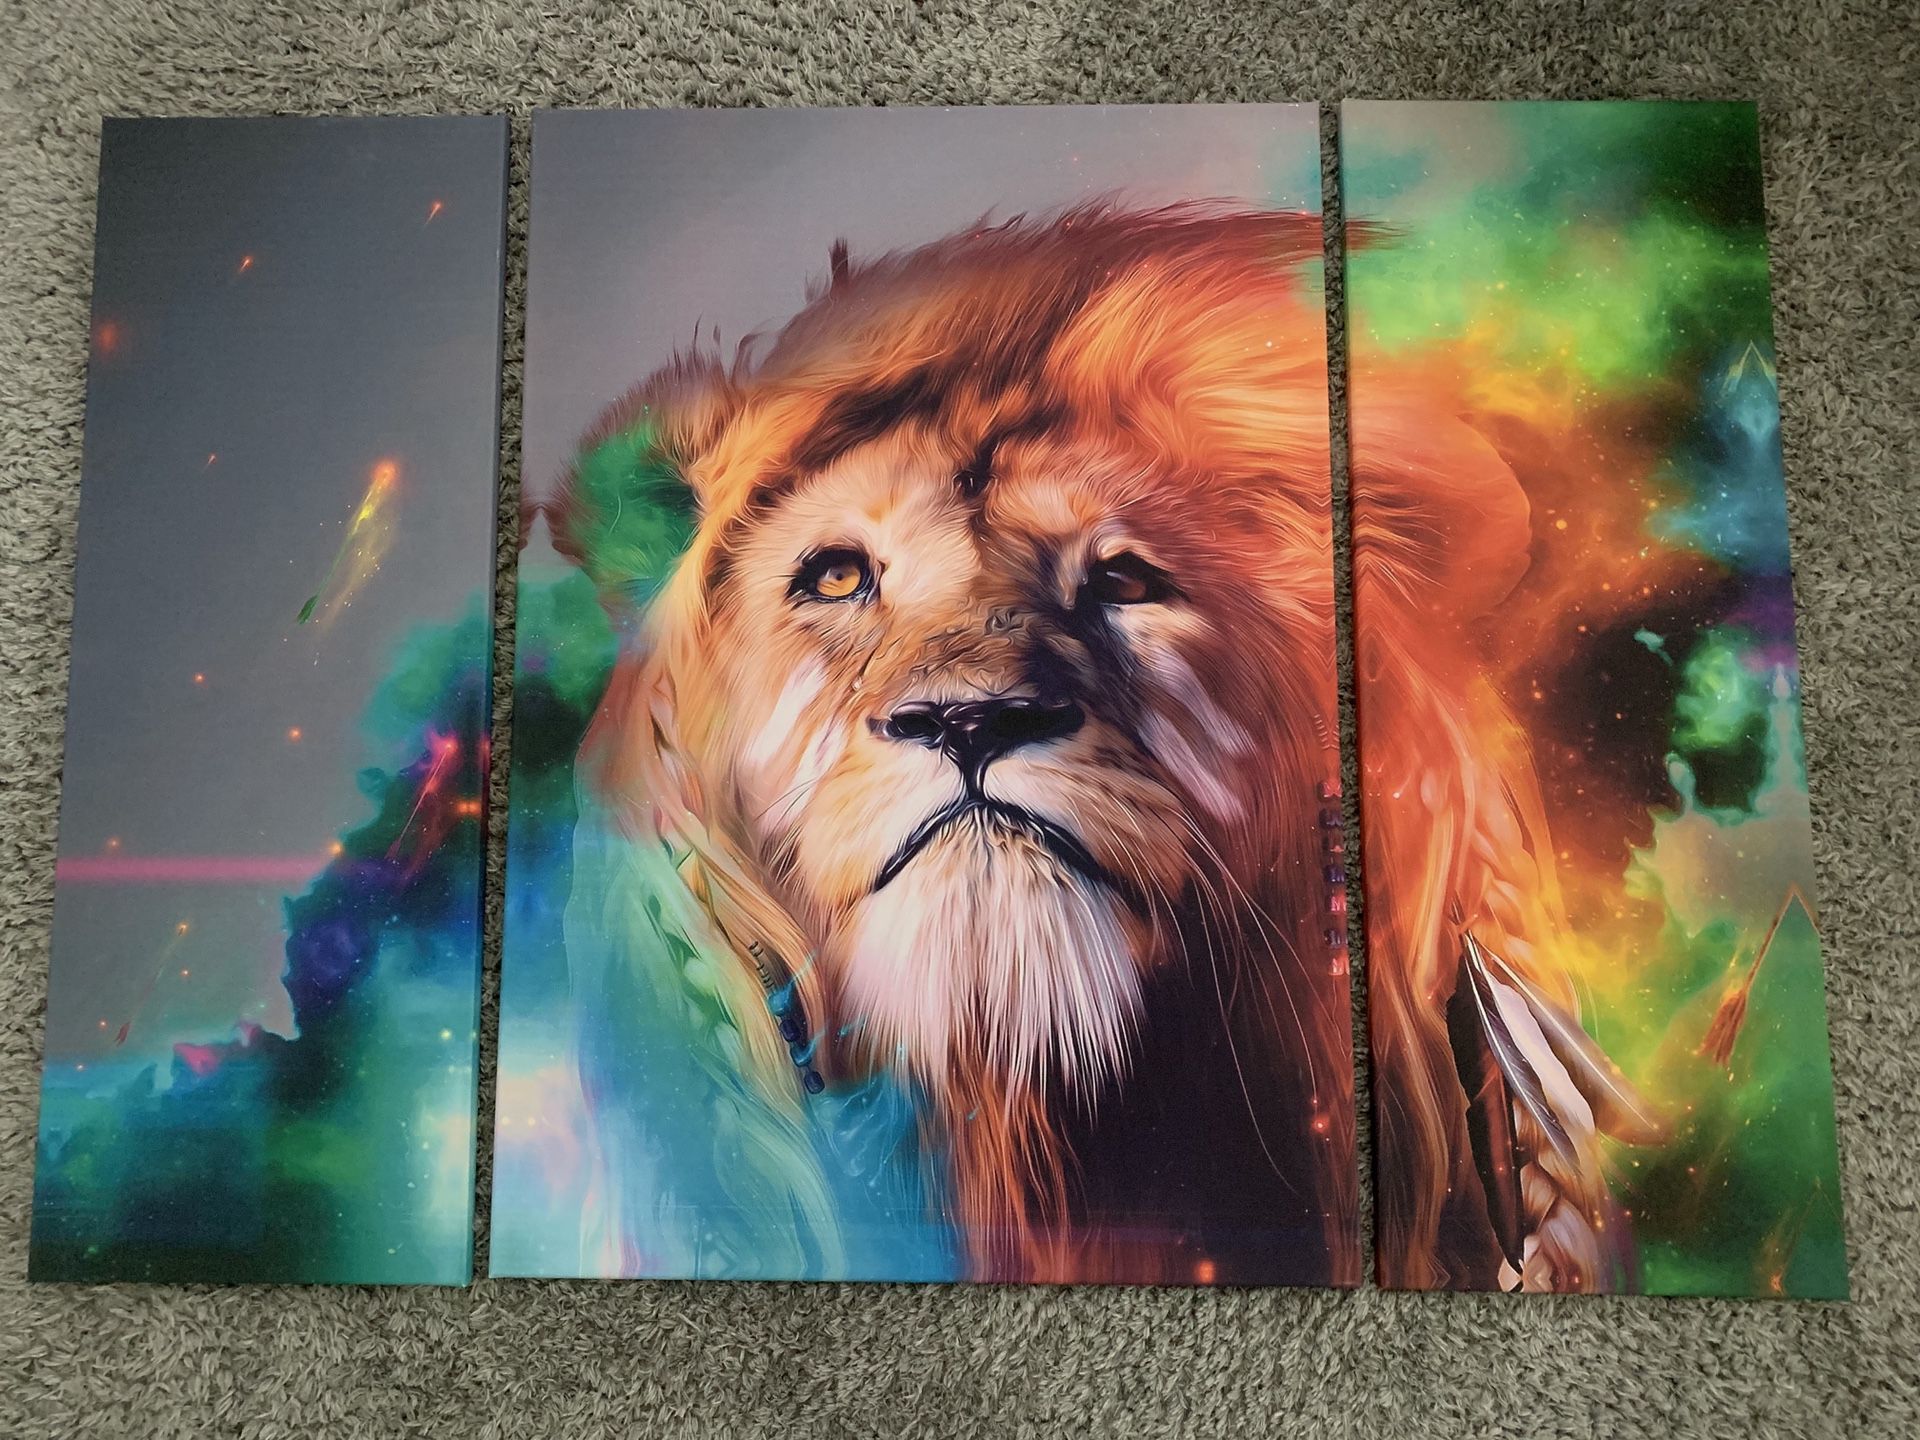 Lion canvas painting